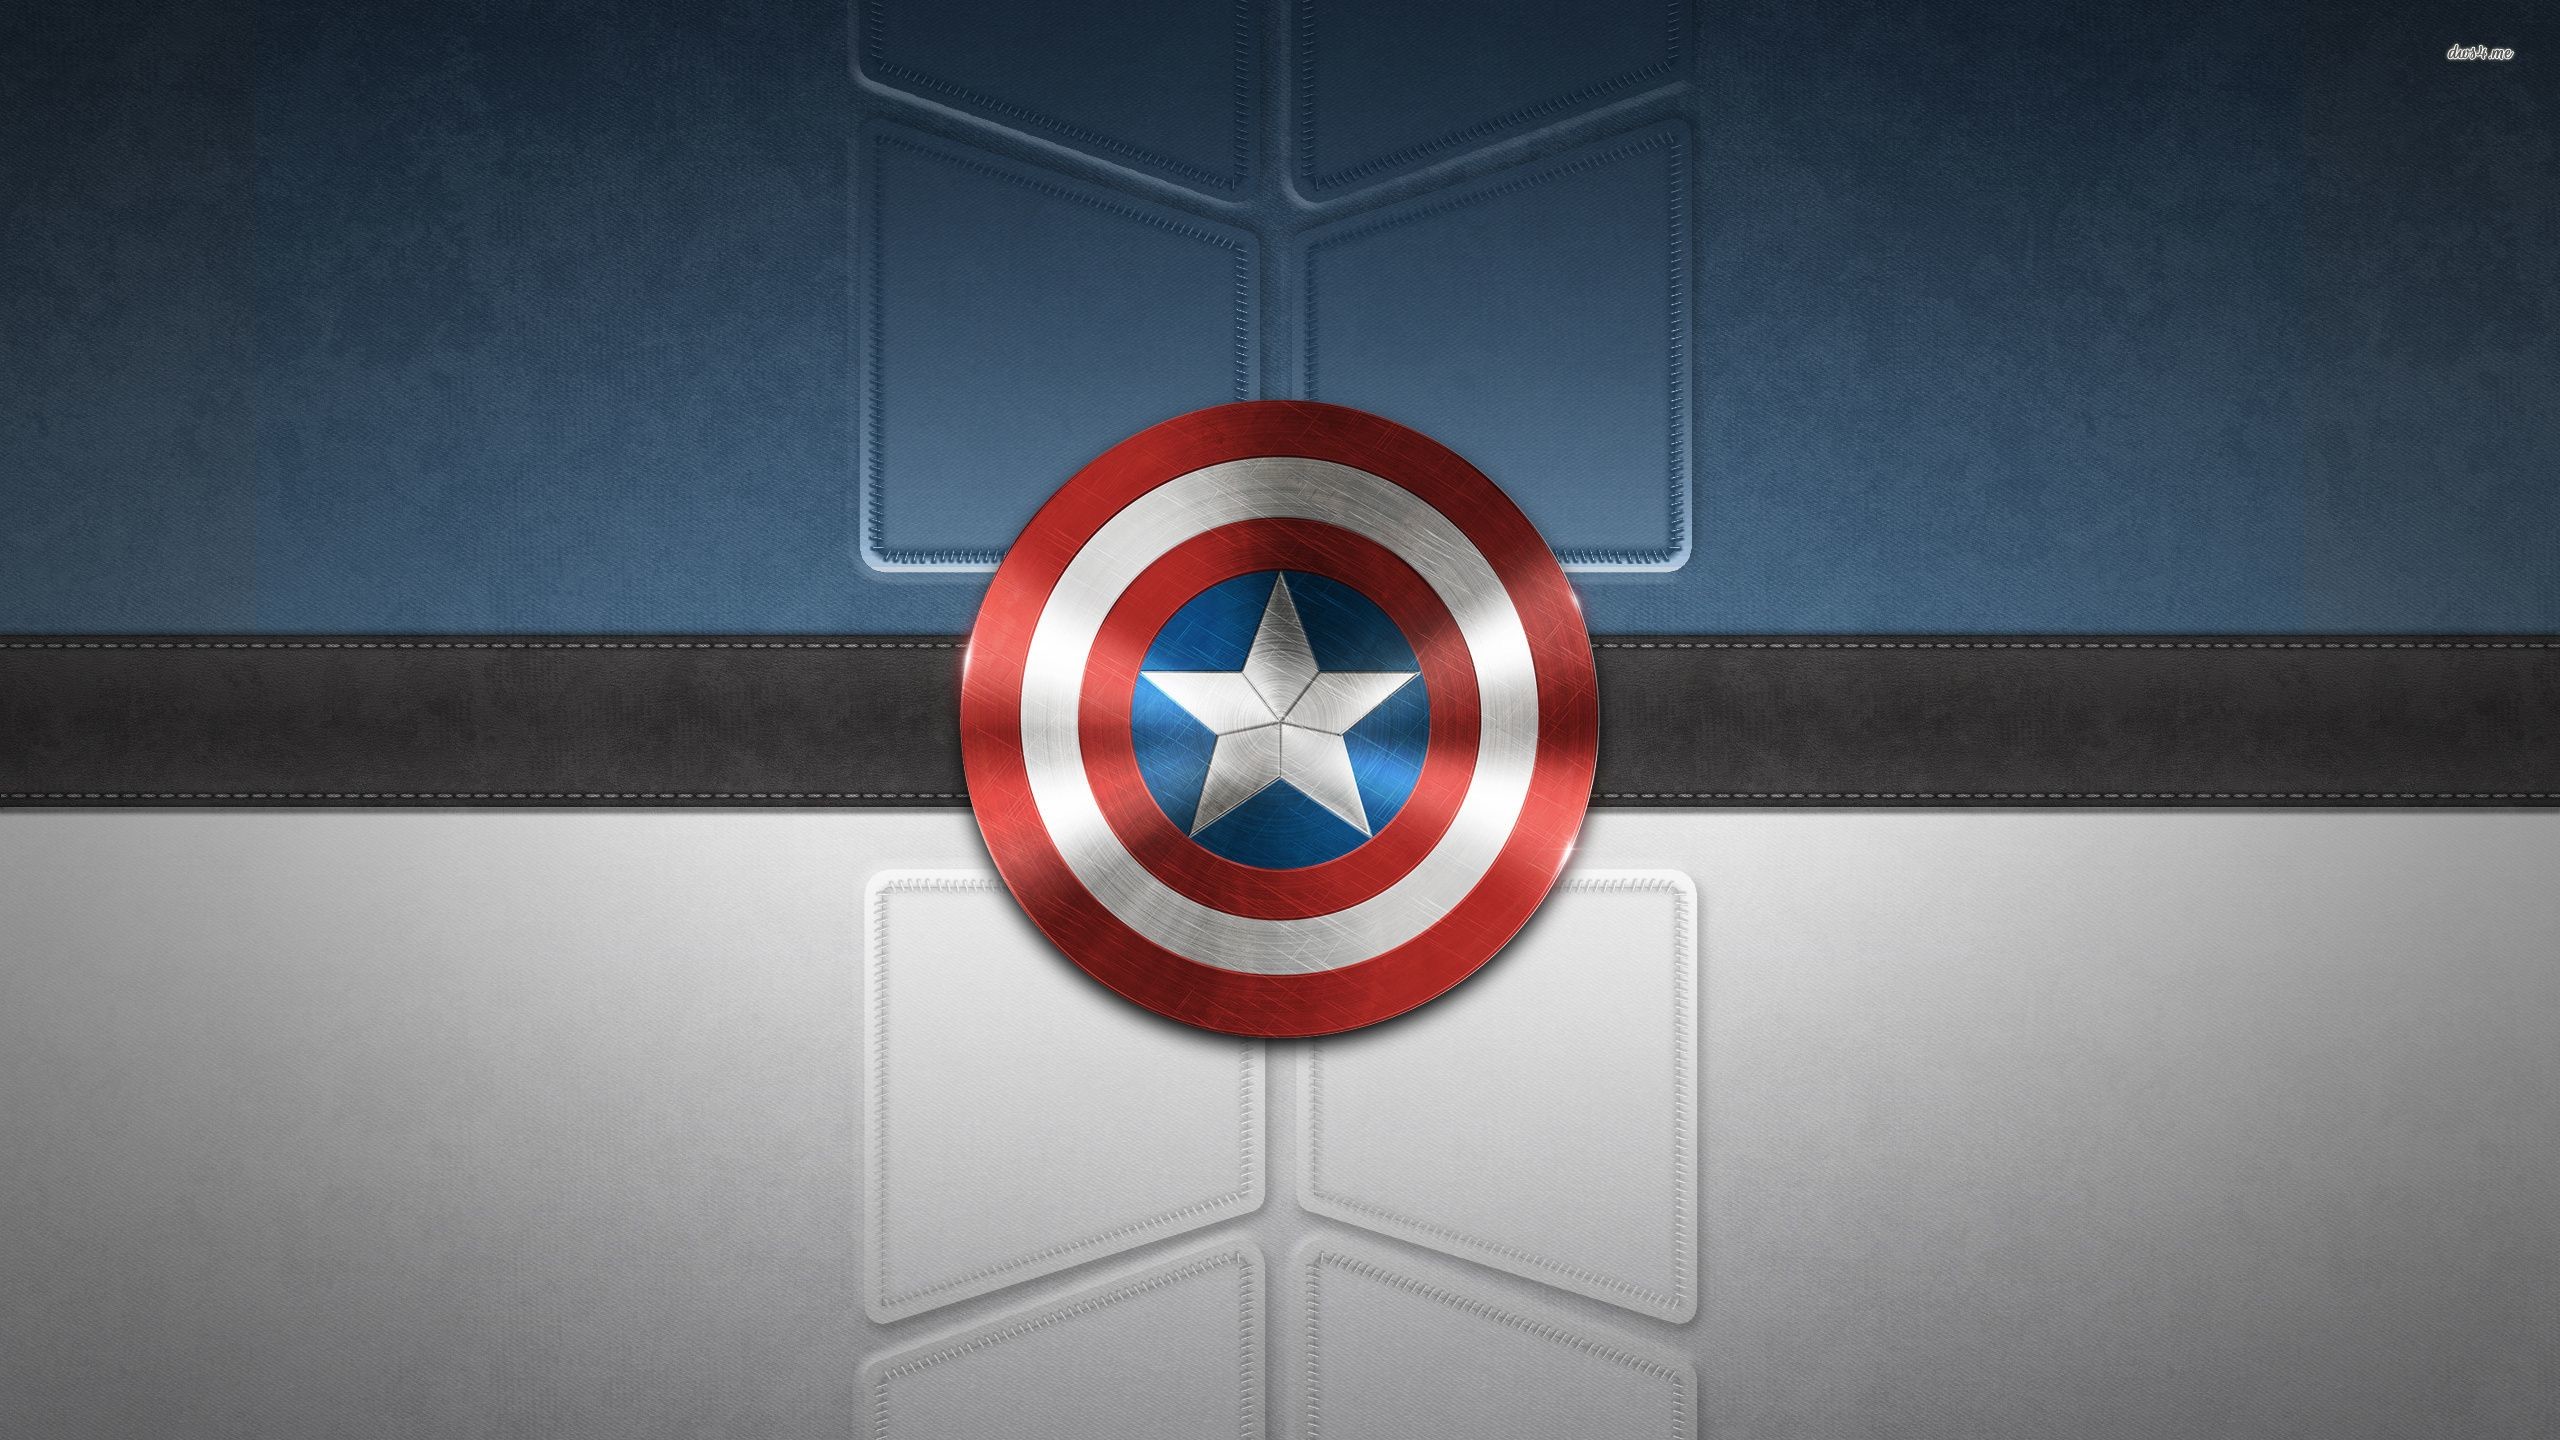 2560x1440 Captain America: The First Avenger shield wallpaper - Movie .